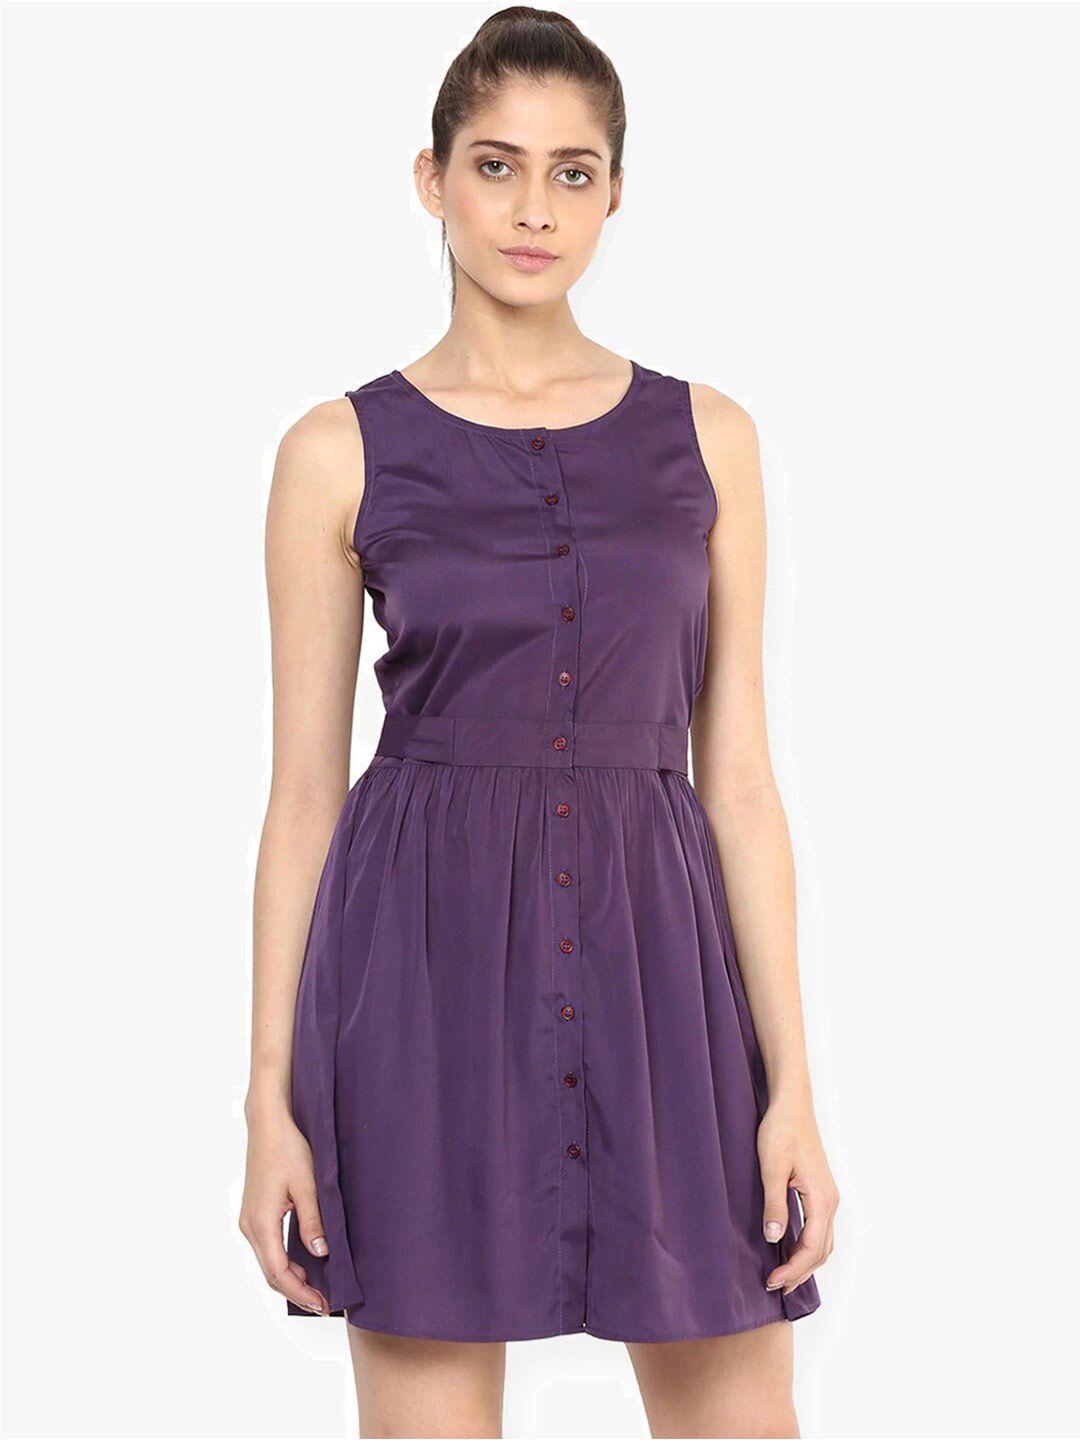 magnetic designs women purple crepe dress